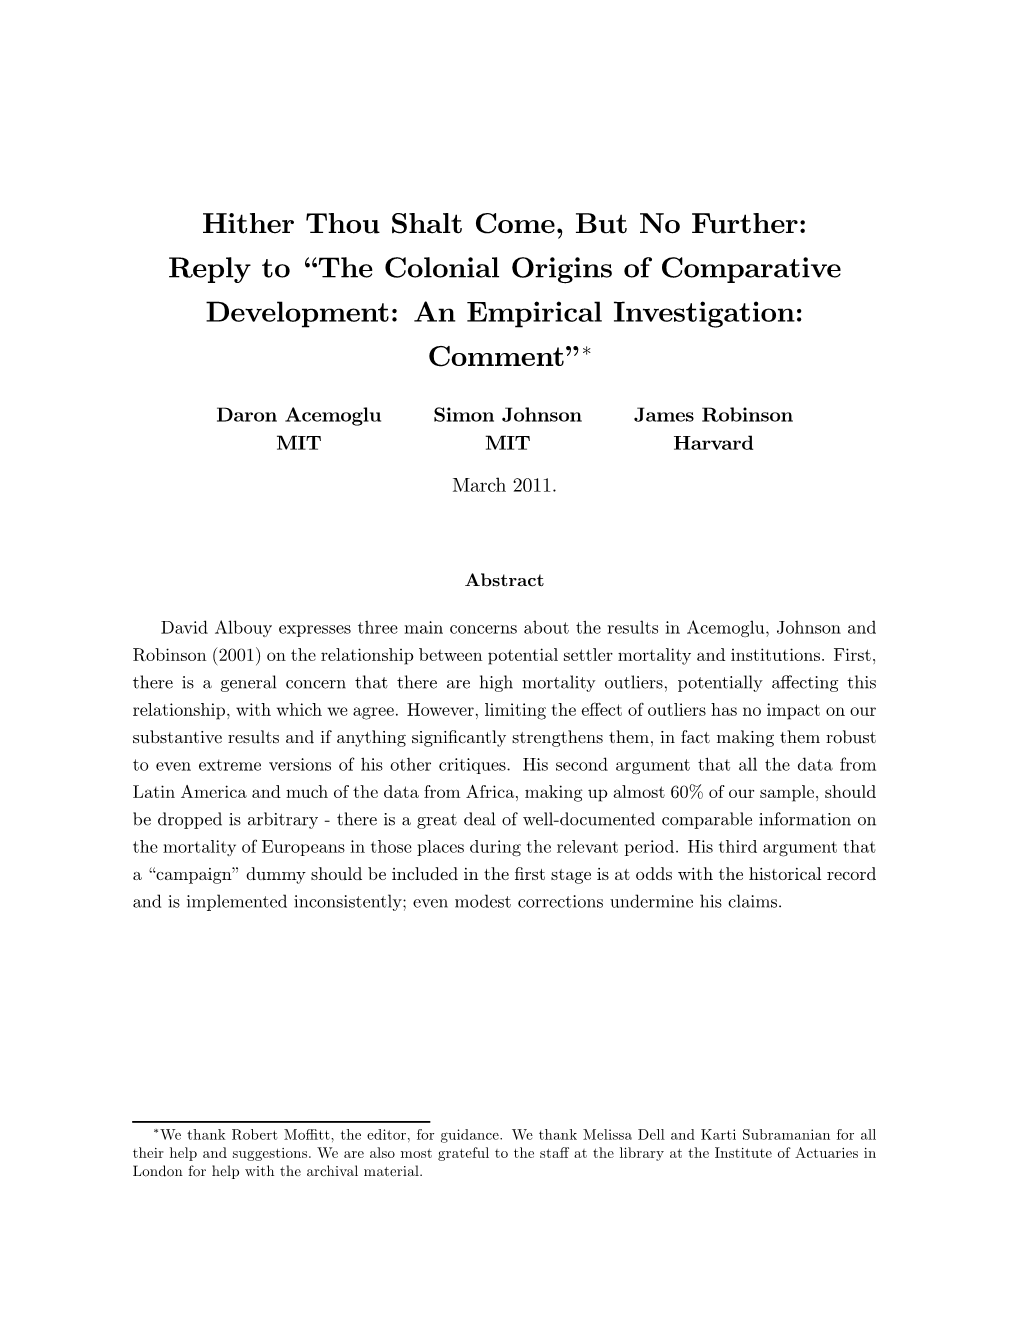 The Colonial Origins of Comparative Development: an Empirical Investigation